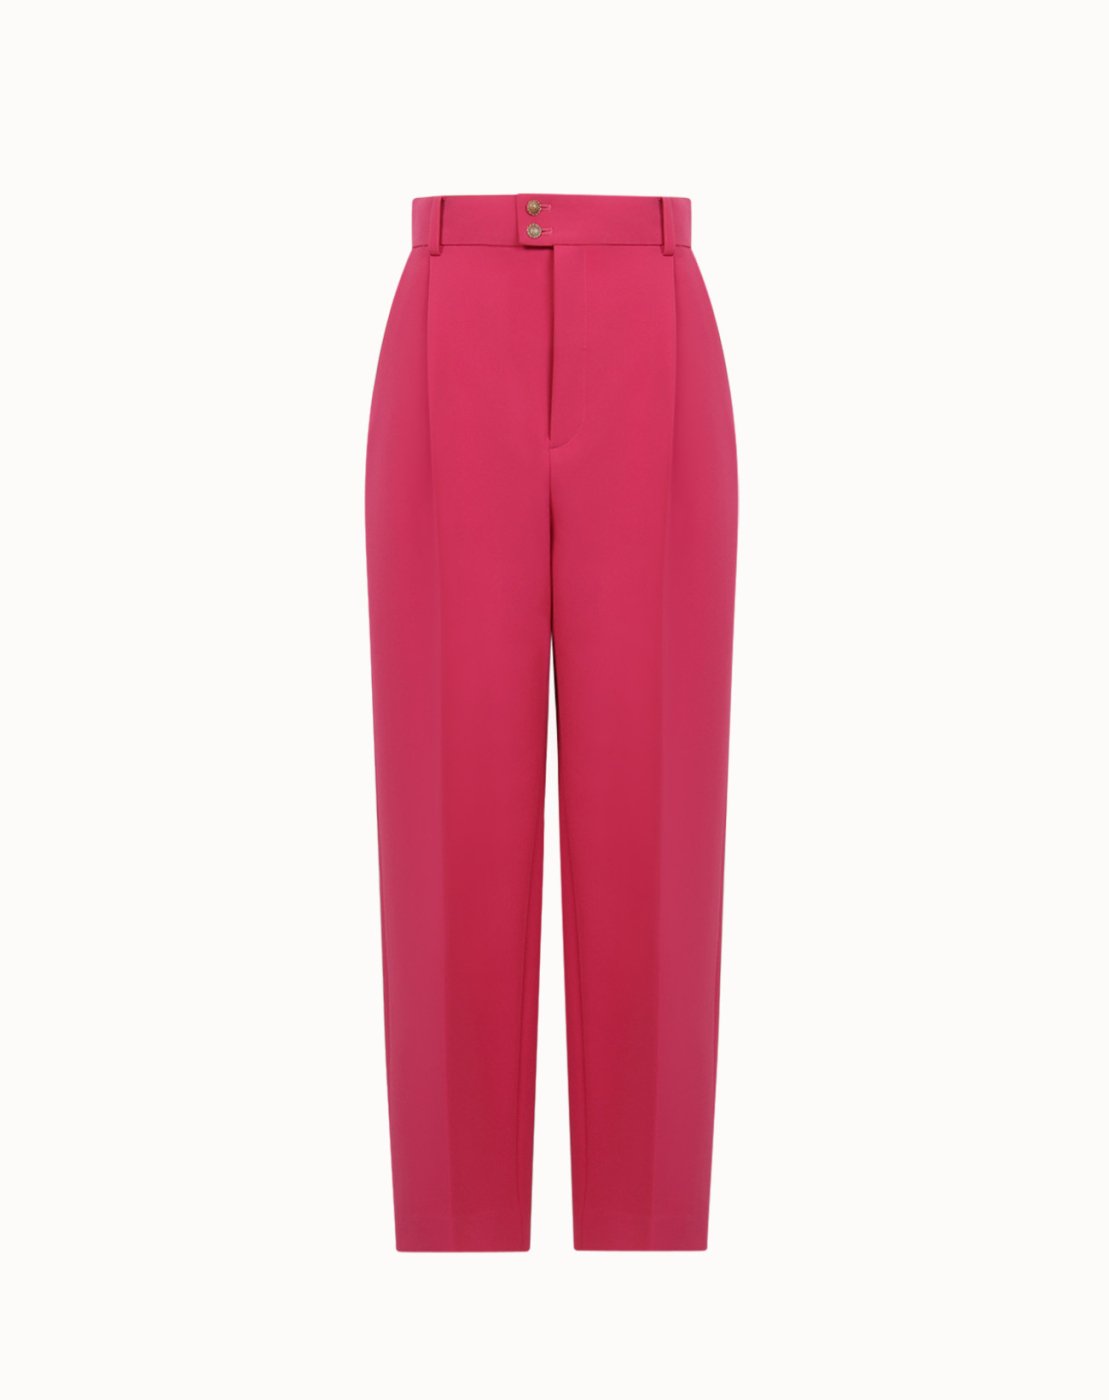 leur logette - Two-way Stretch Double Oxford Pants - Pink